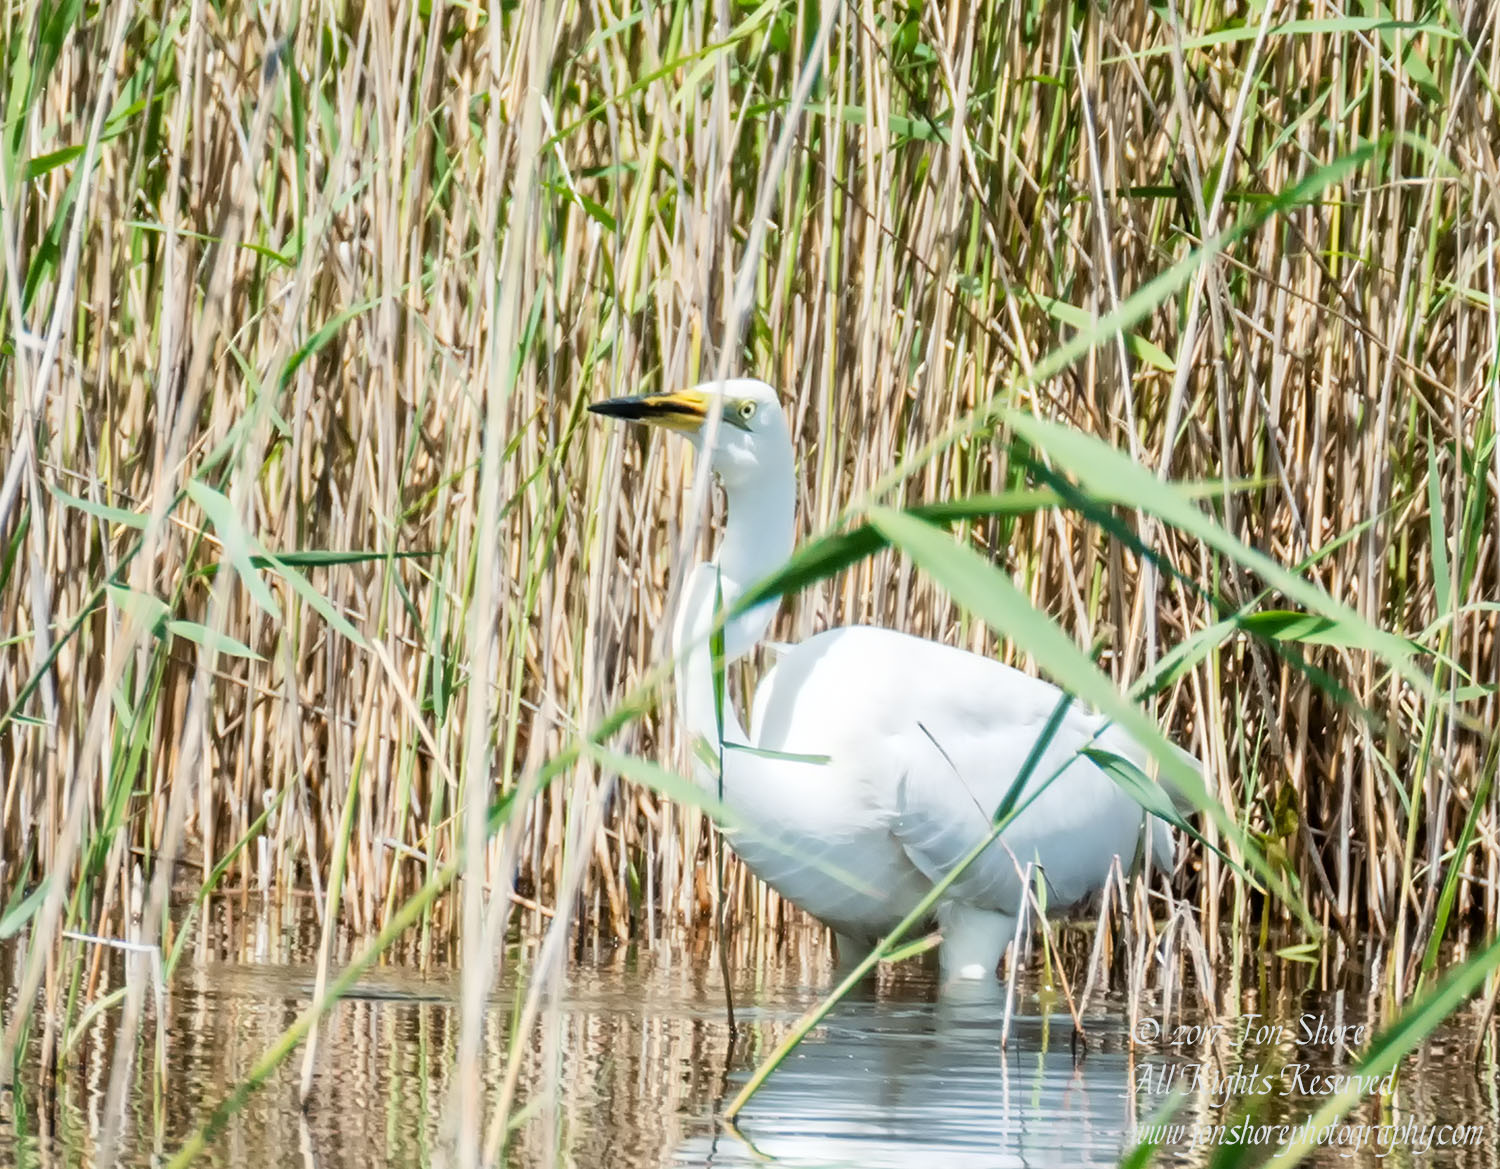 Great White Egret, Kemeri National Park, Latvia. Tamron 600mm